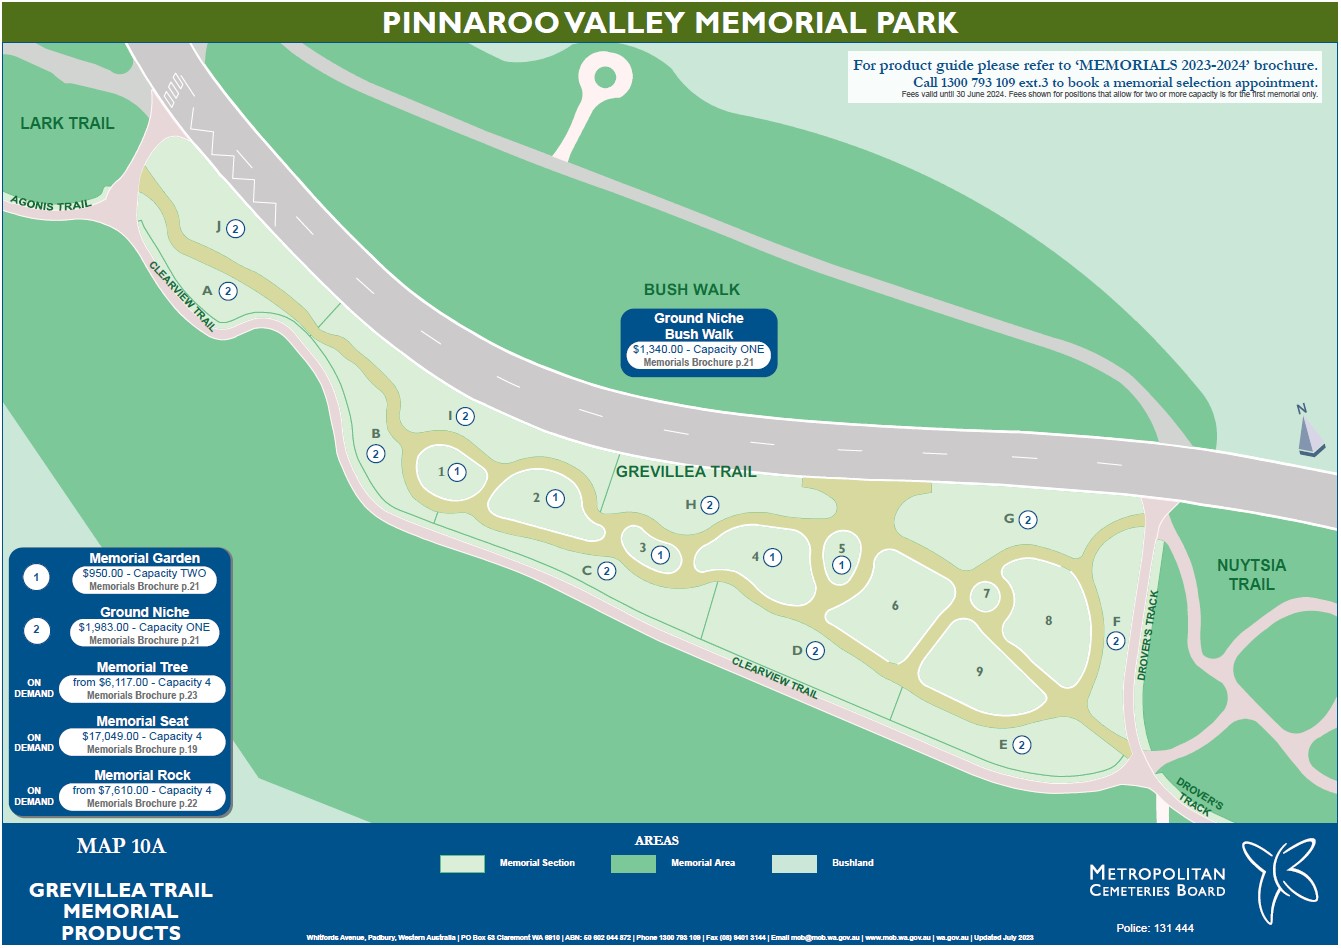 Map 10A Grevillea Trails Memorial Products Pinnaroo Valley Memorial Park